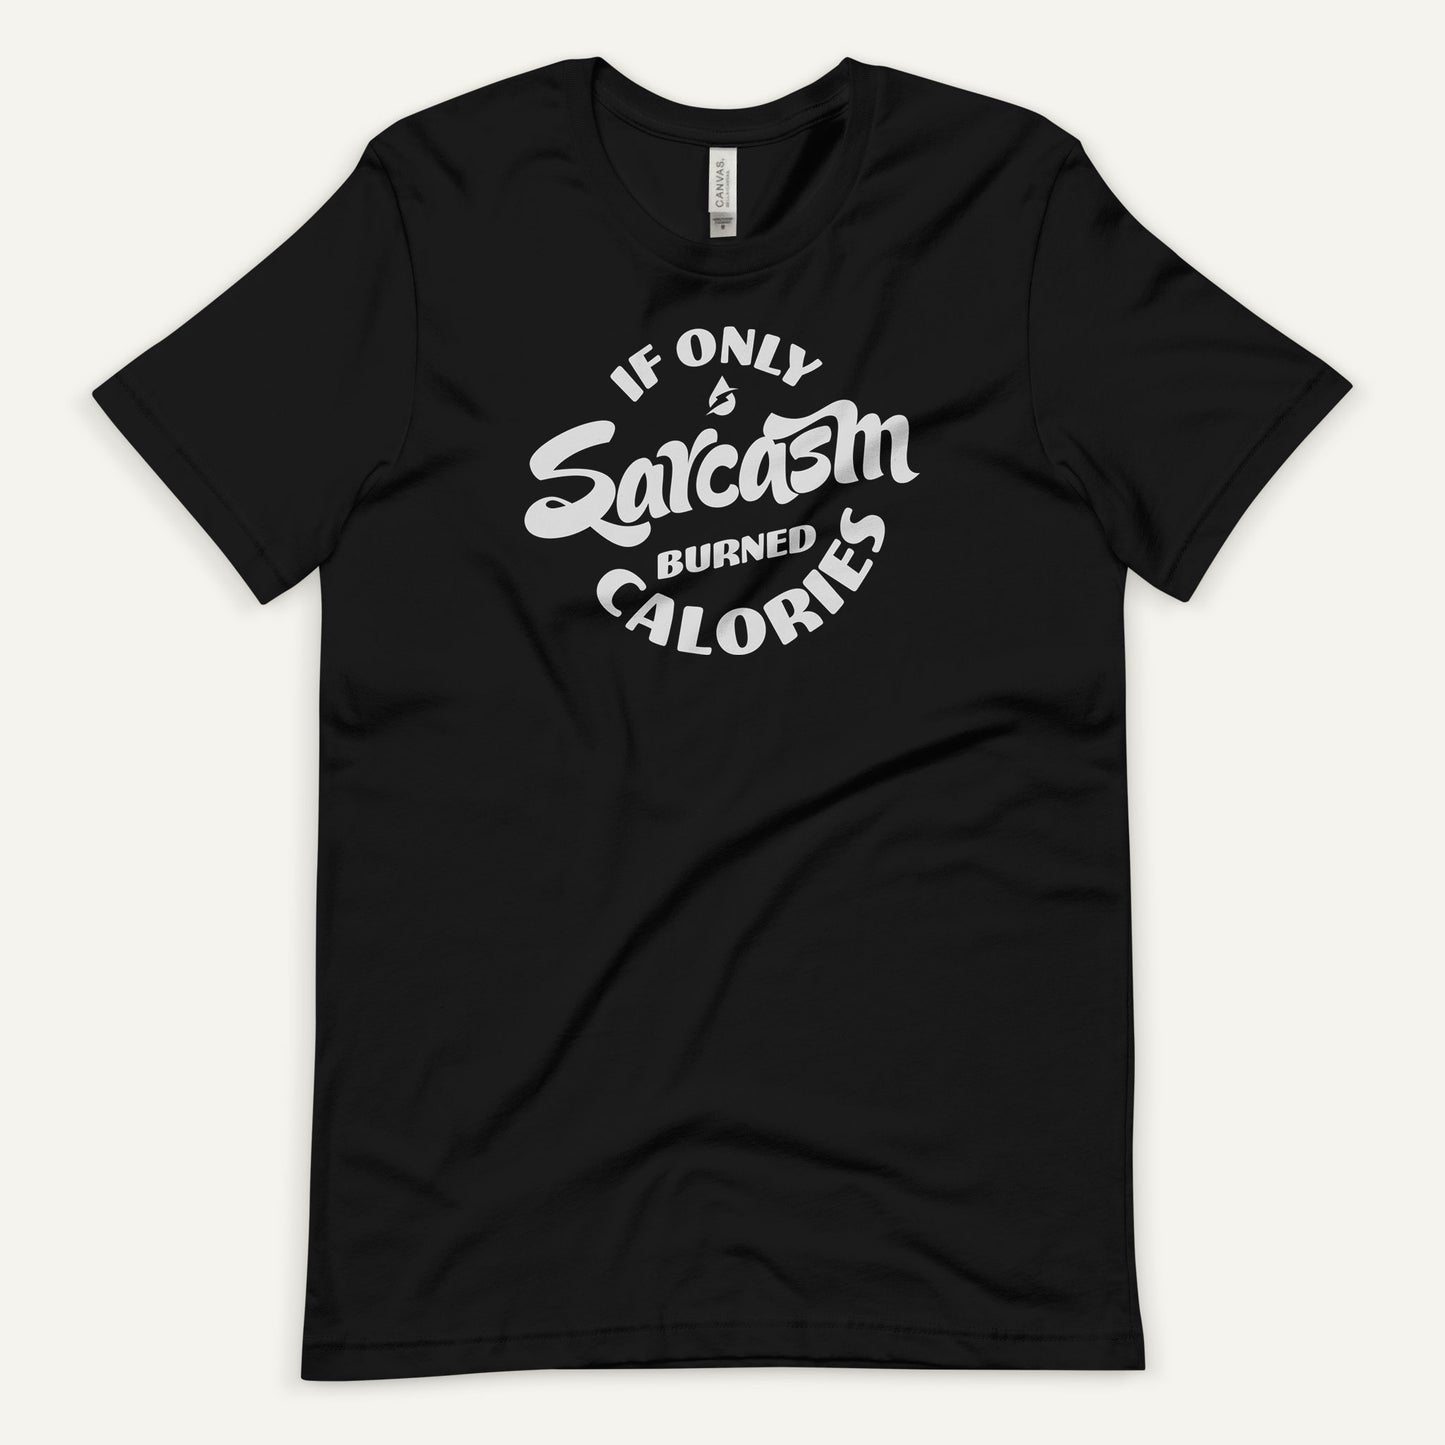 If Only Sarcasm Burned Calories Men's Standard T-Shirt